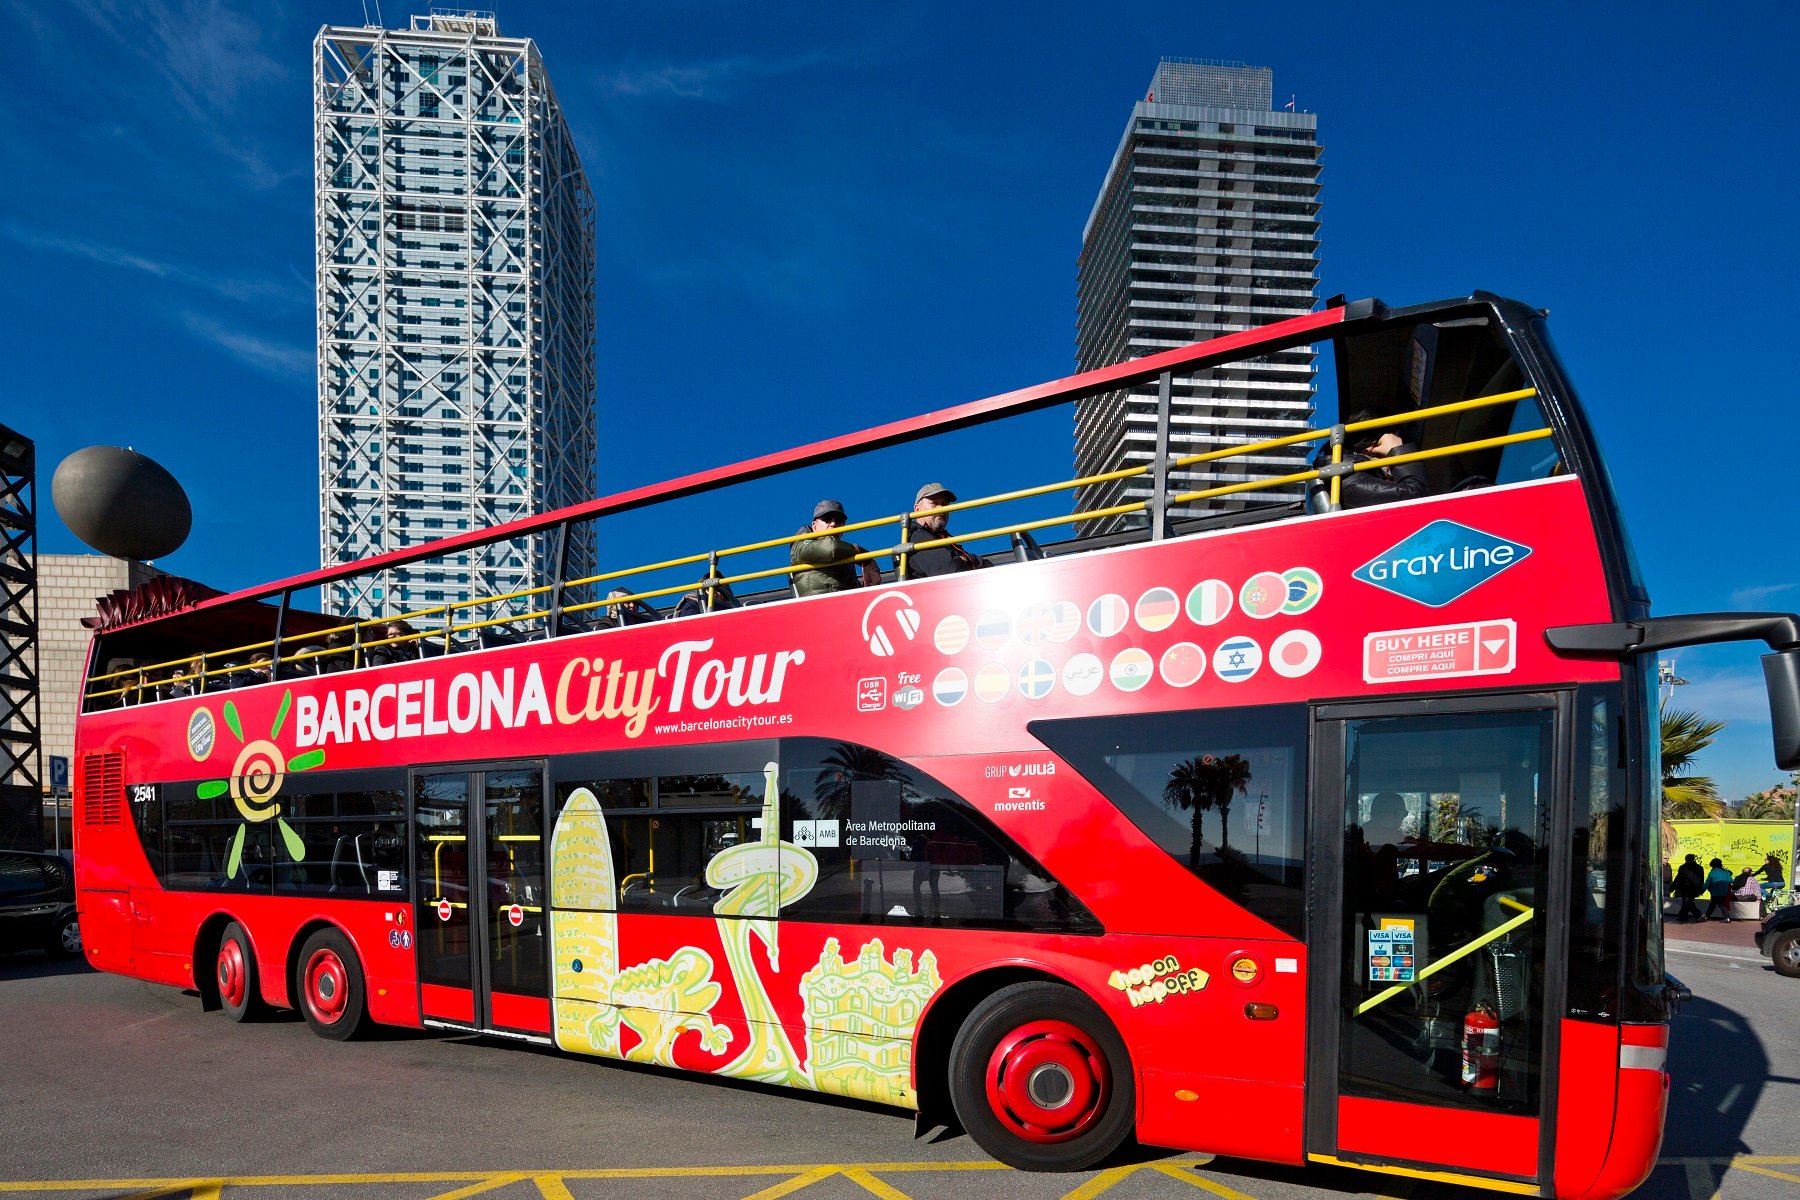 A photo of a Barcelona City Tour bus.